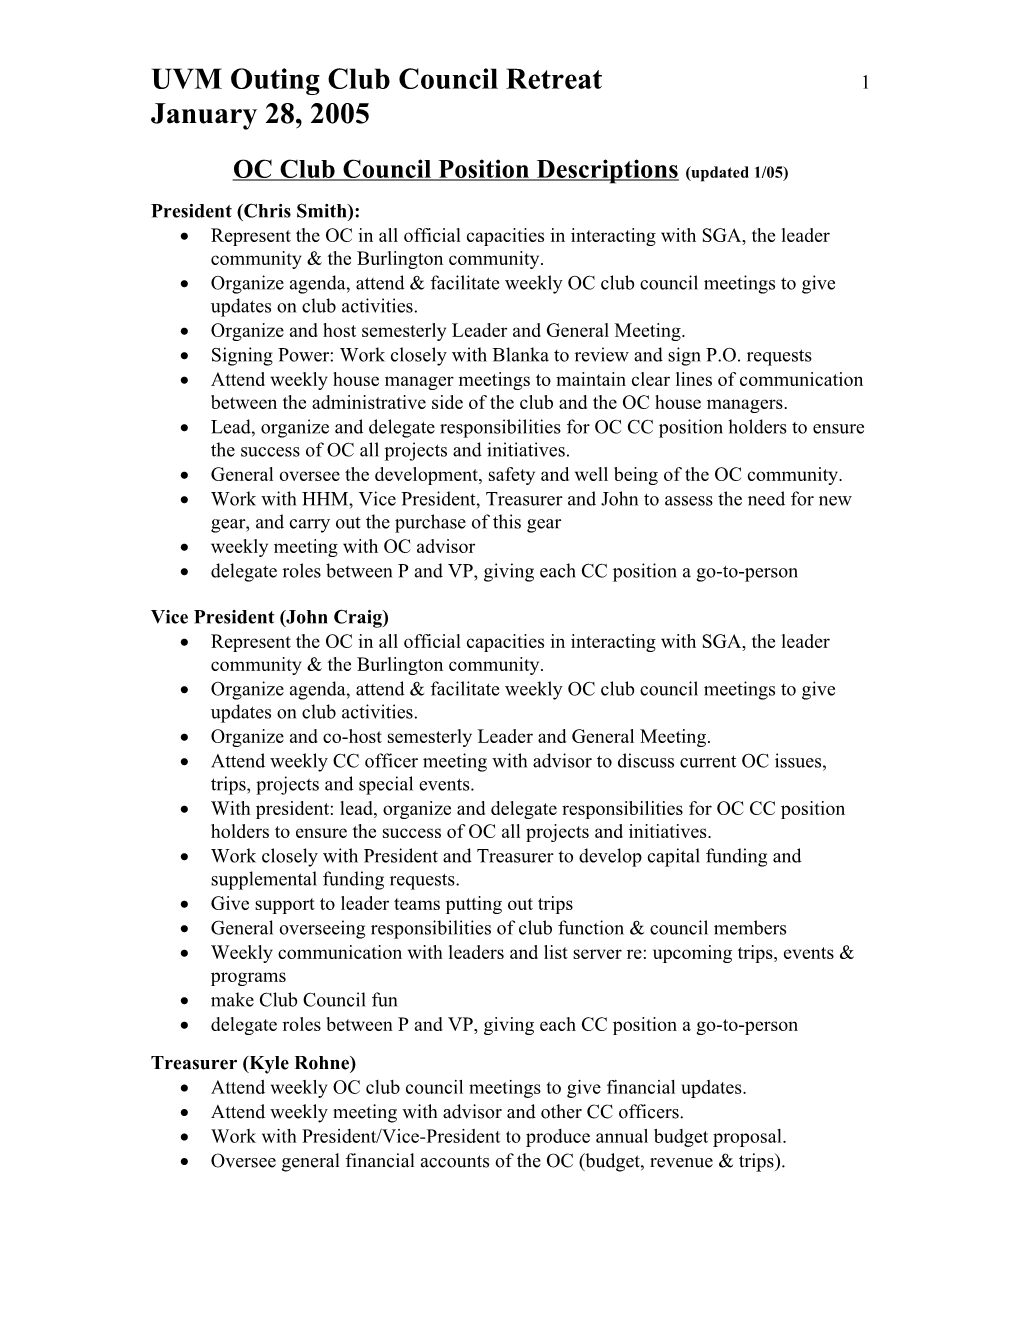 OC Club Council Position Descriptions (Updated 1/05)